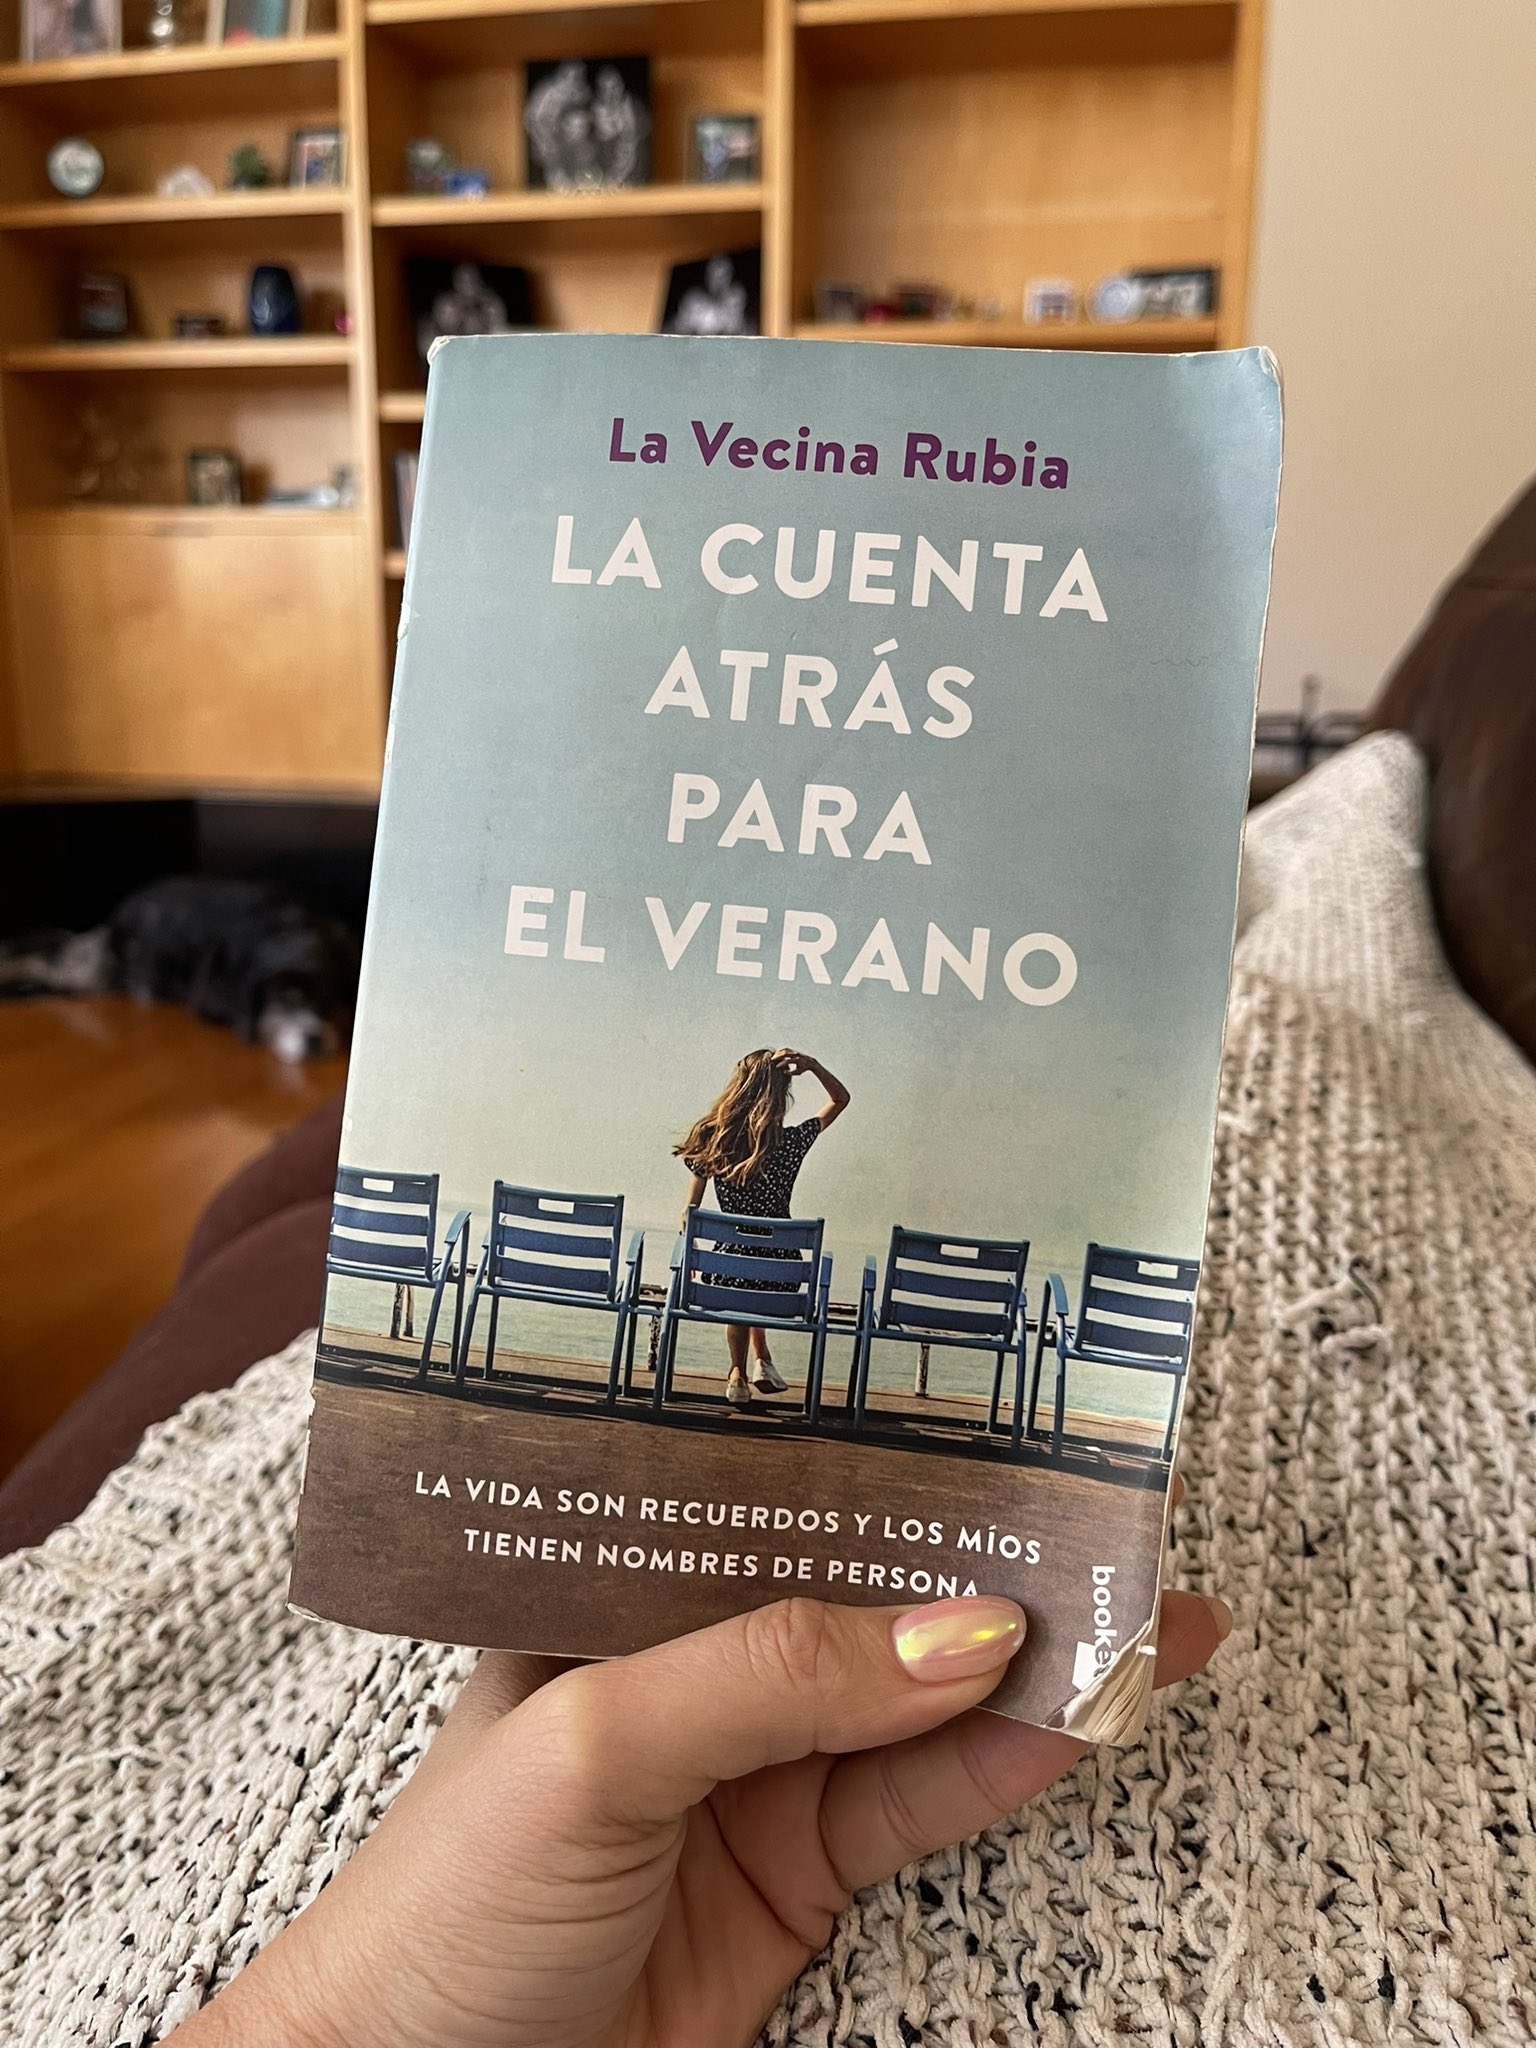  La Vecina Rubia: books, biography, latest update